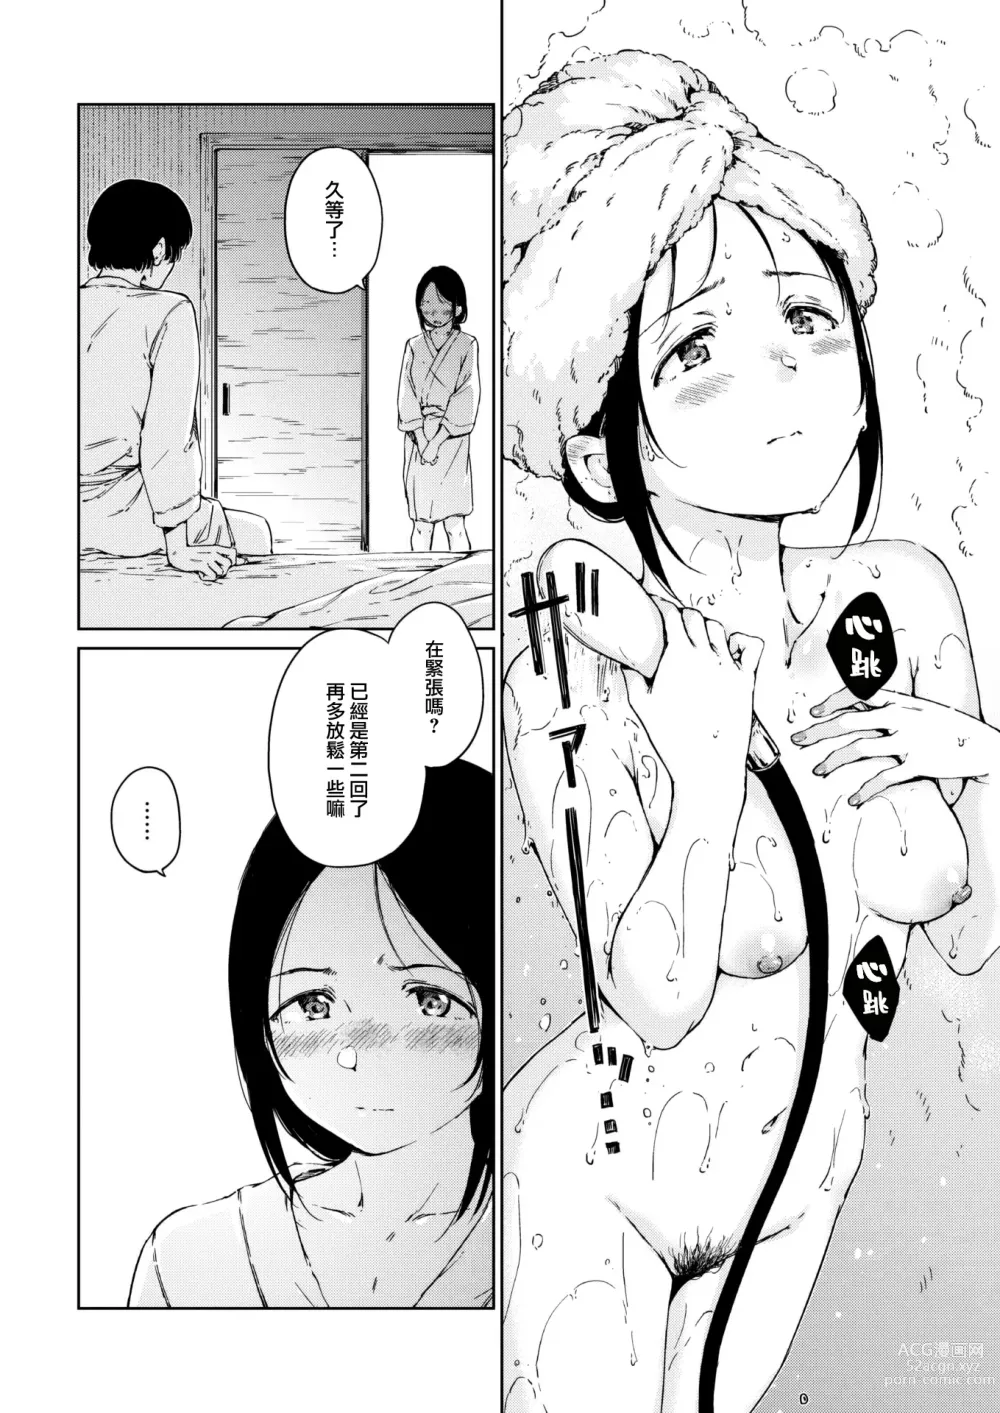 Page 7 of manga Vanilla Ice